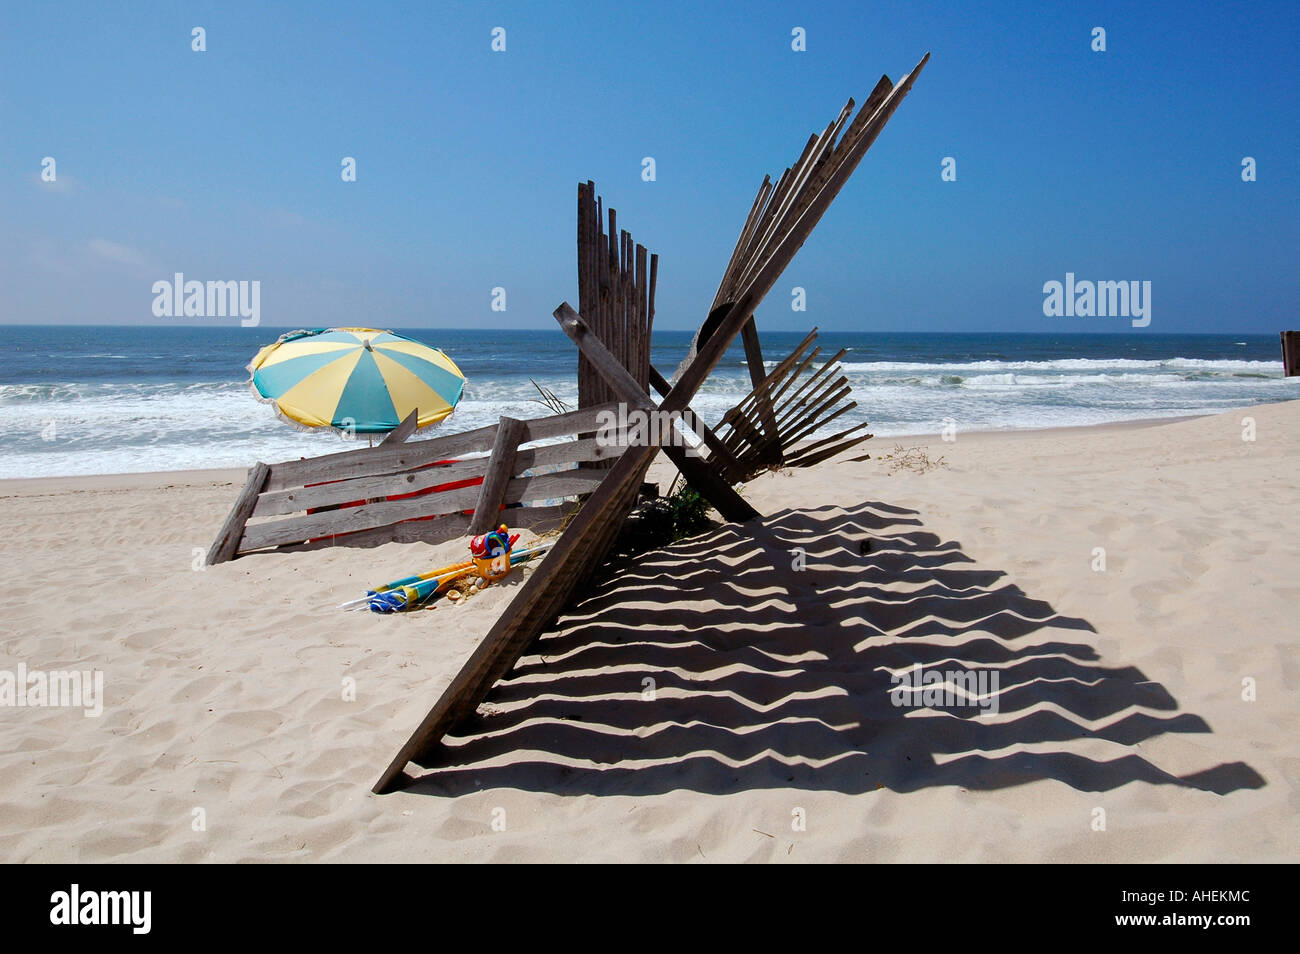 A wooden fence cast shadow on the sandy beach at Praia de Mira between Figueira da Foz and Aveiro.central Portugal Stock Photo